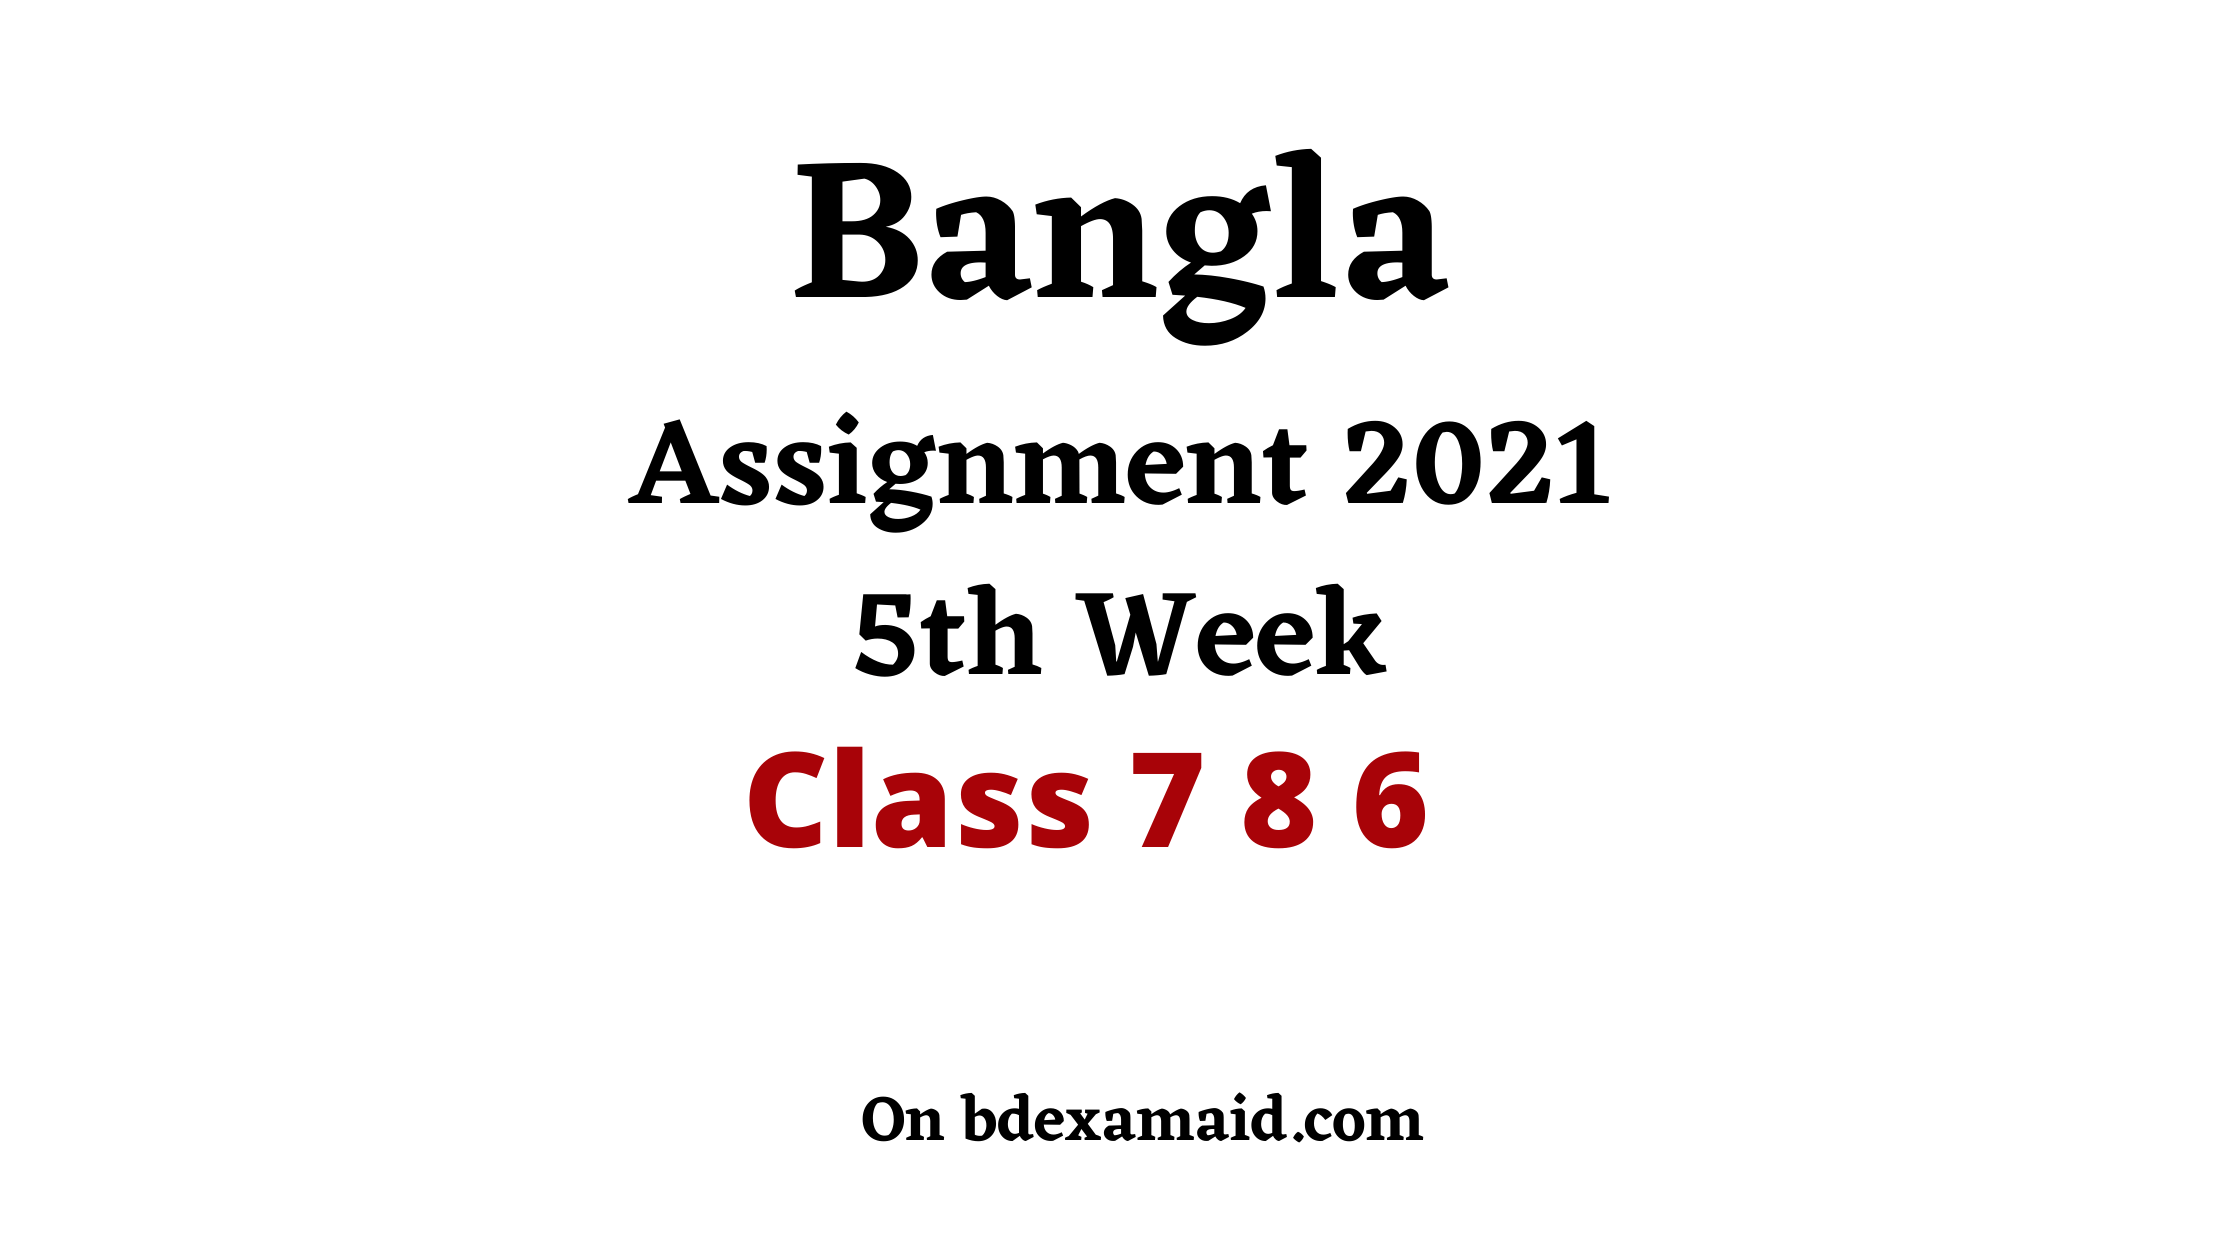 bangla assignment 5th week